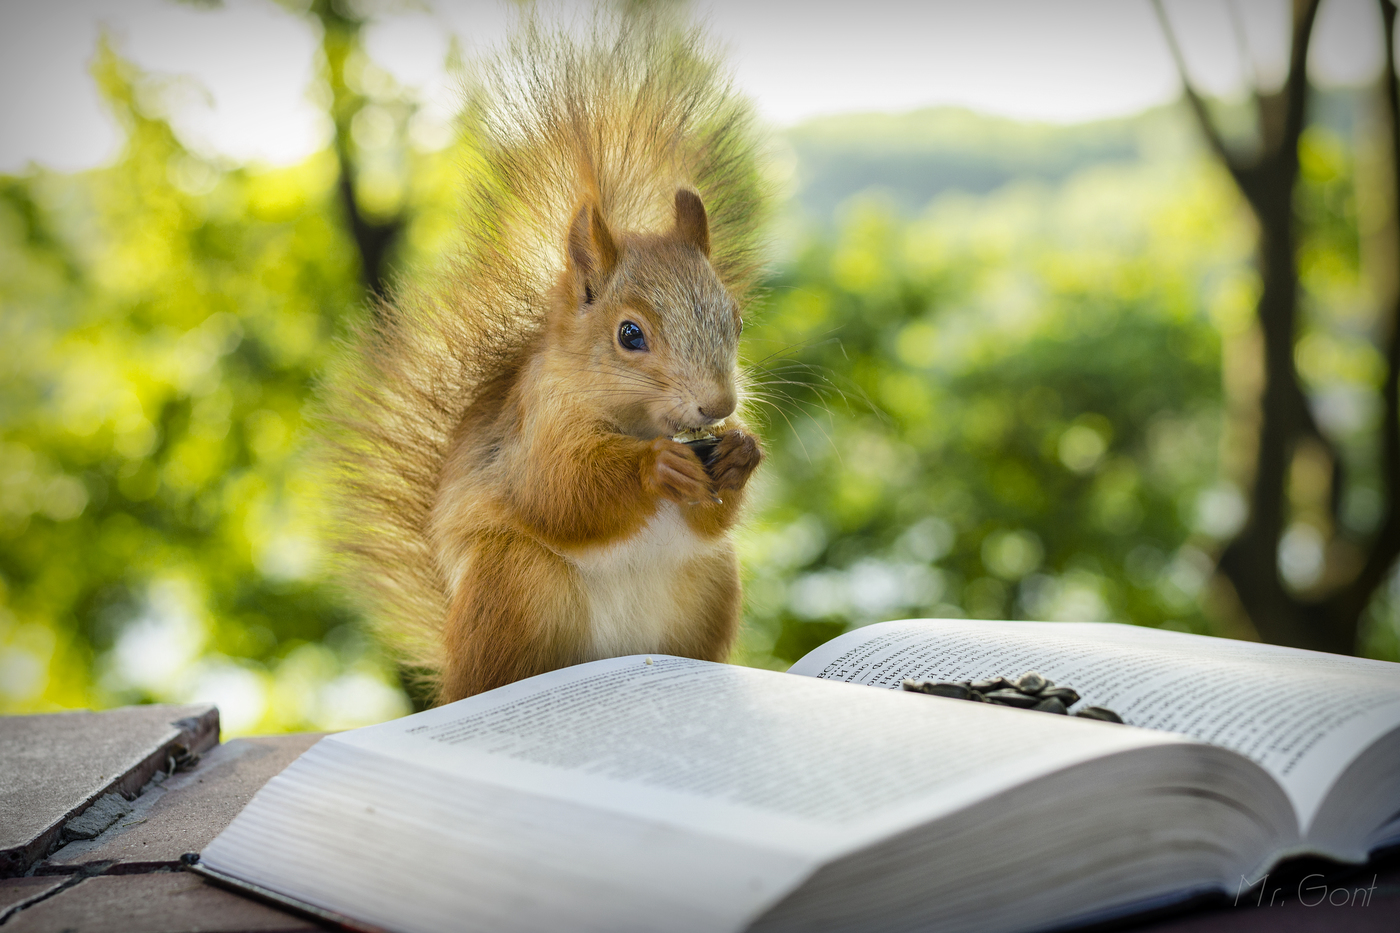 Squirrel "reads" a book